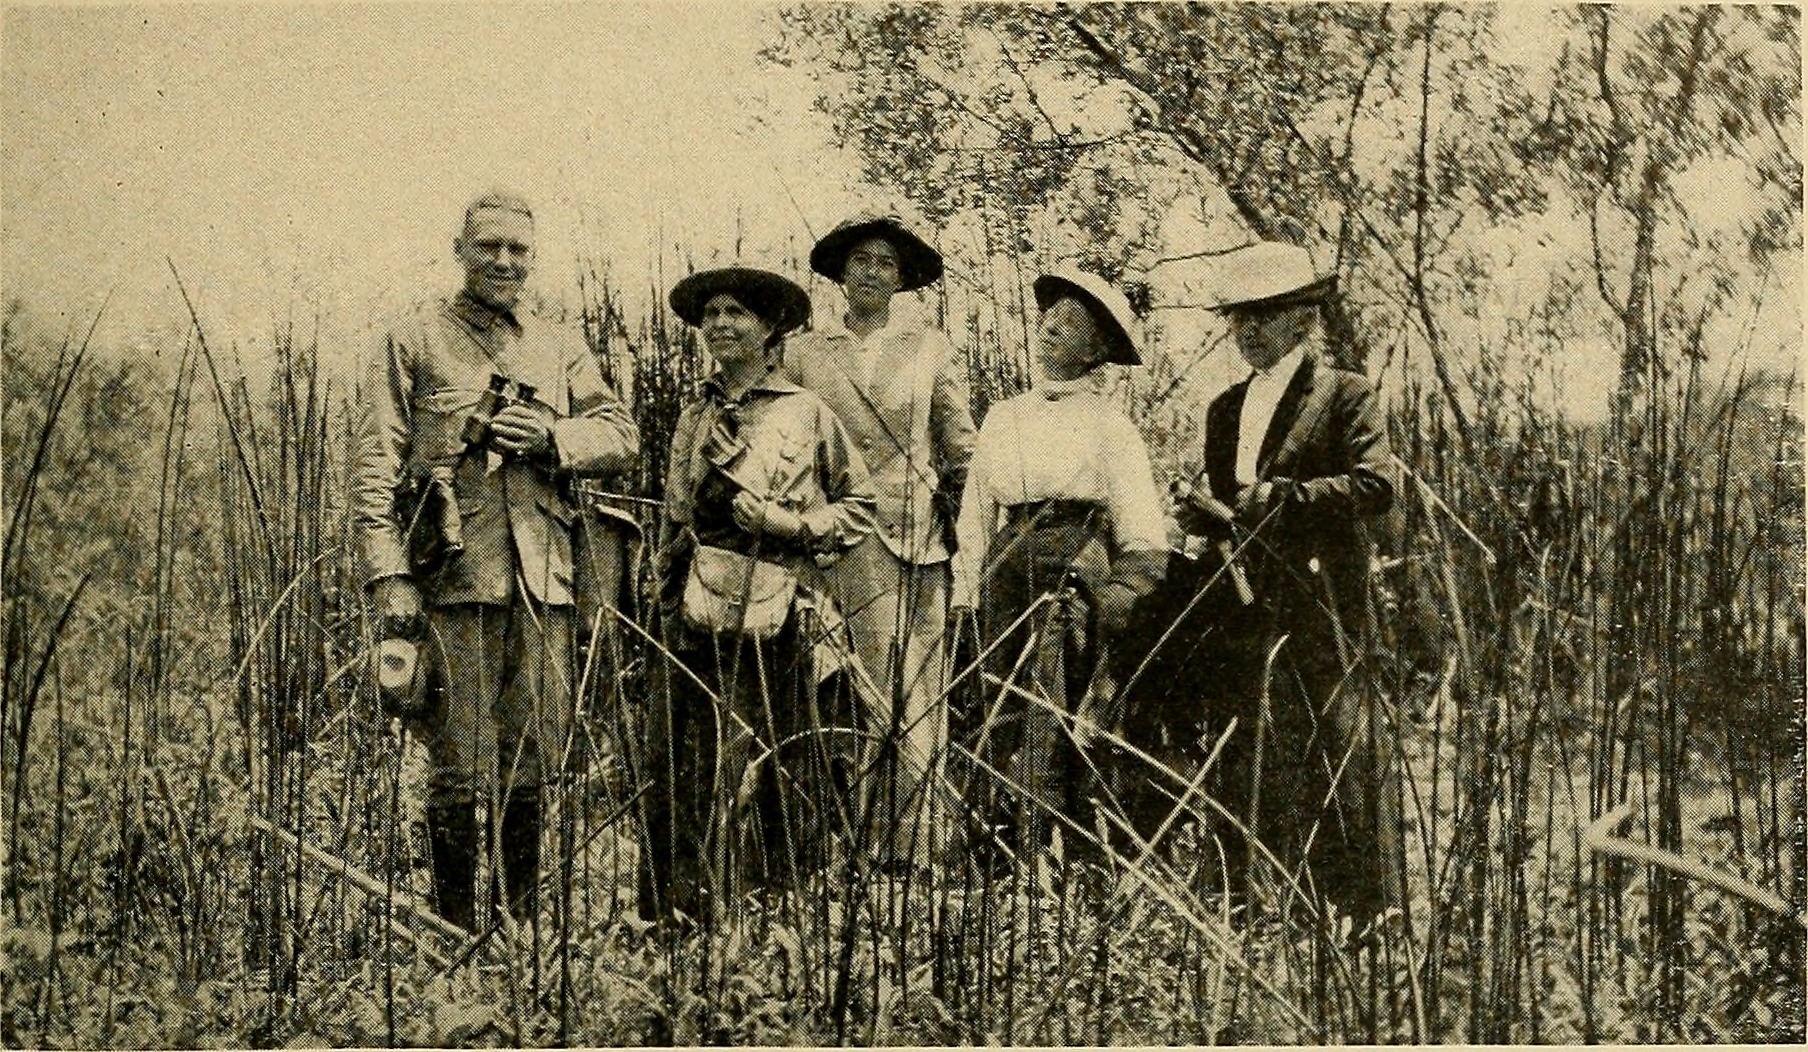 Los Angeles Audubon Society members (1918)